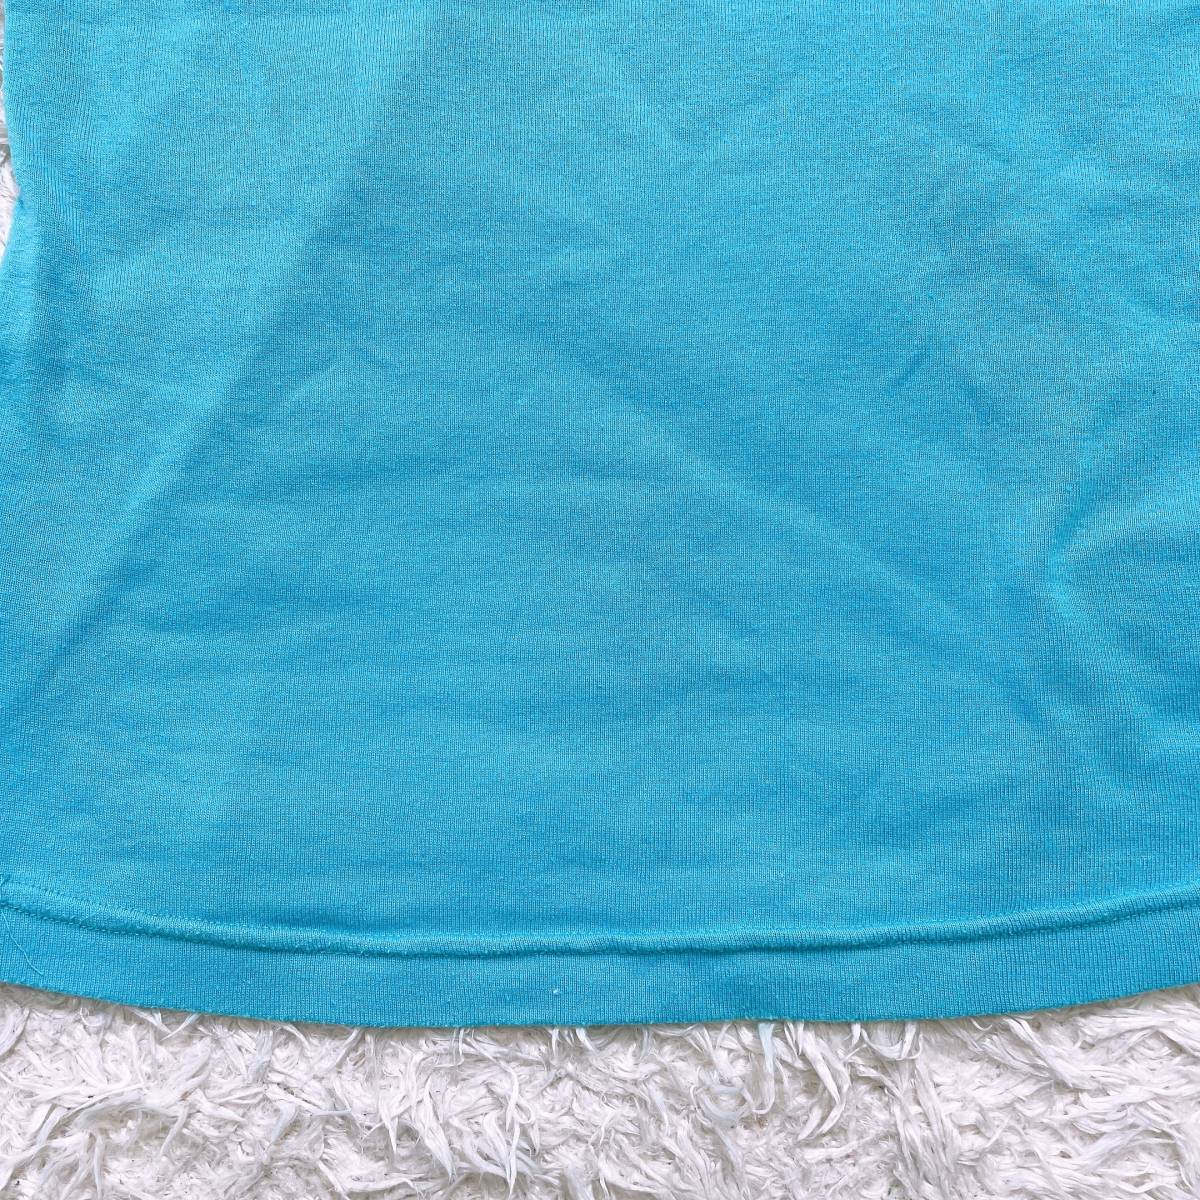 【22043】 MiNAMi.R.G.C ミナミアールジーシー タンクトップ ライトブルー 水色 ブルー 青 120 キッズ 子供用 フリルデザイン かわいい